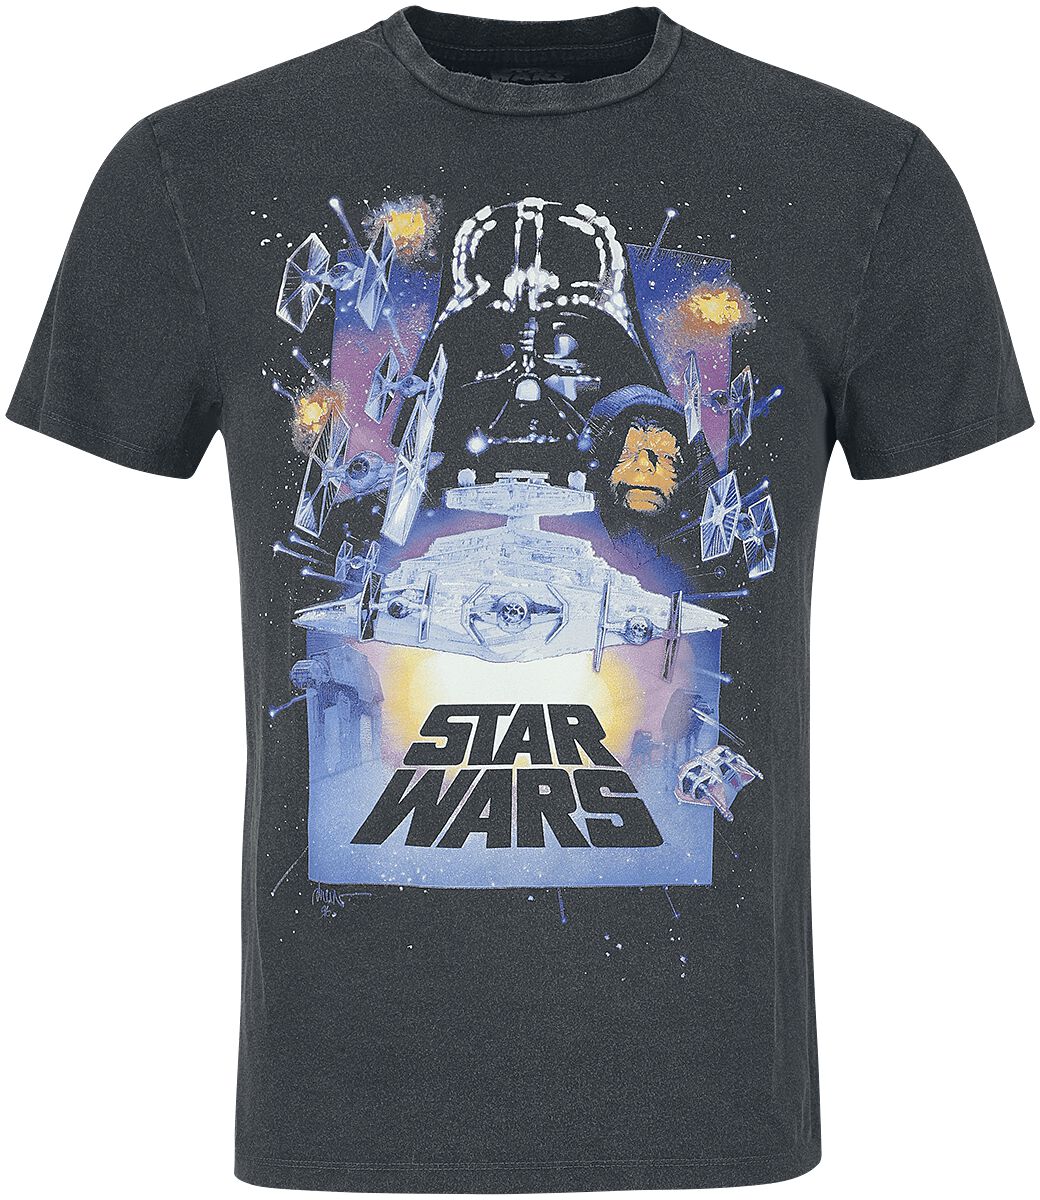 Star Wars Poster T-Shirt black